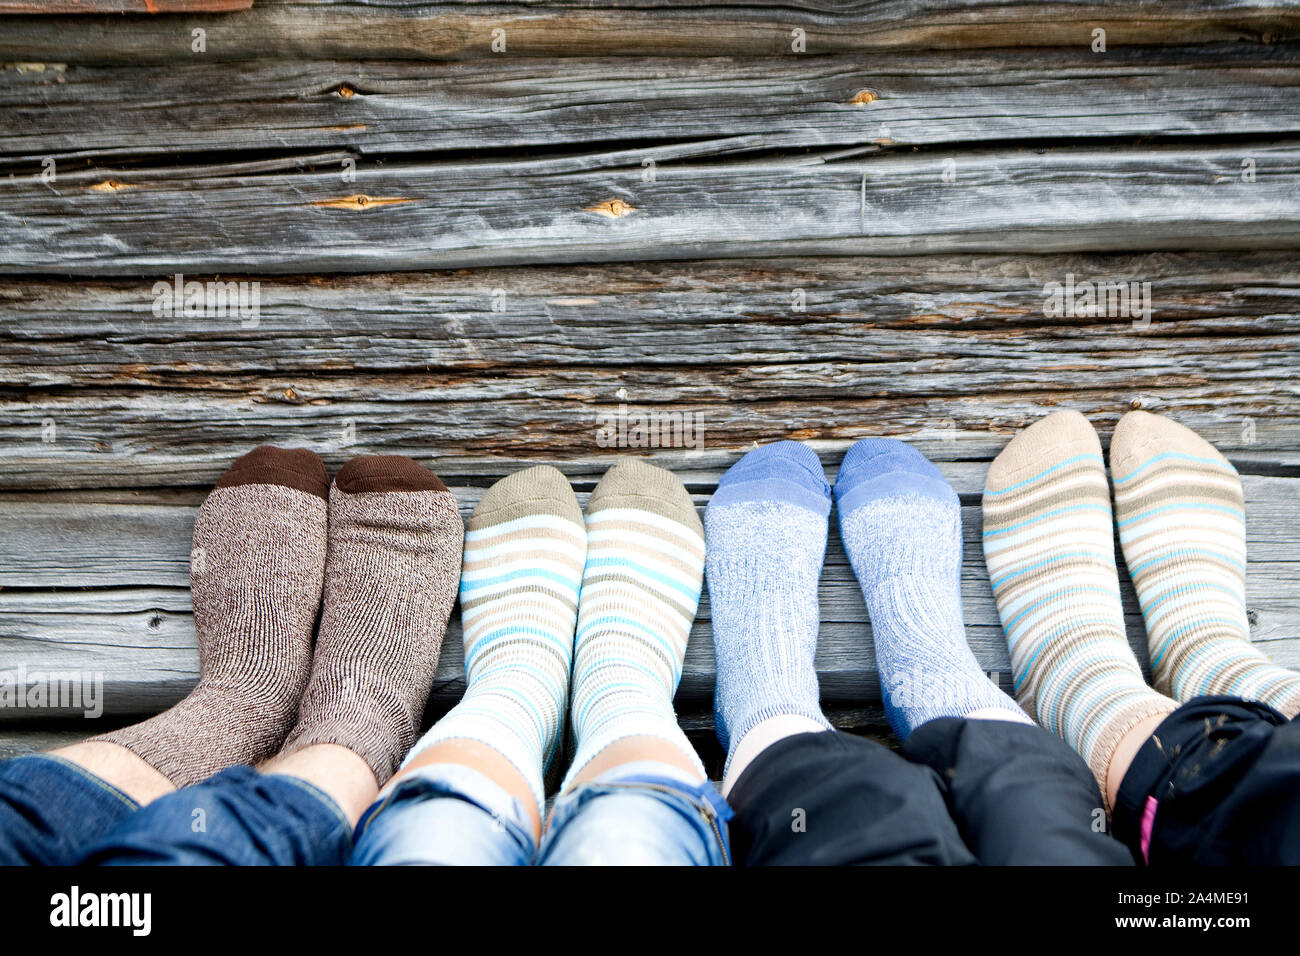 Feet In Assortment Of Socks On Wood Stock Photo